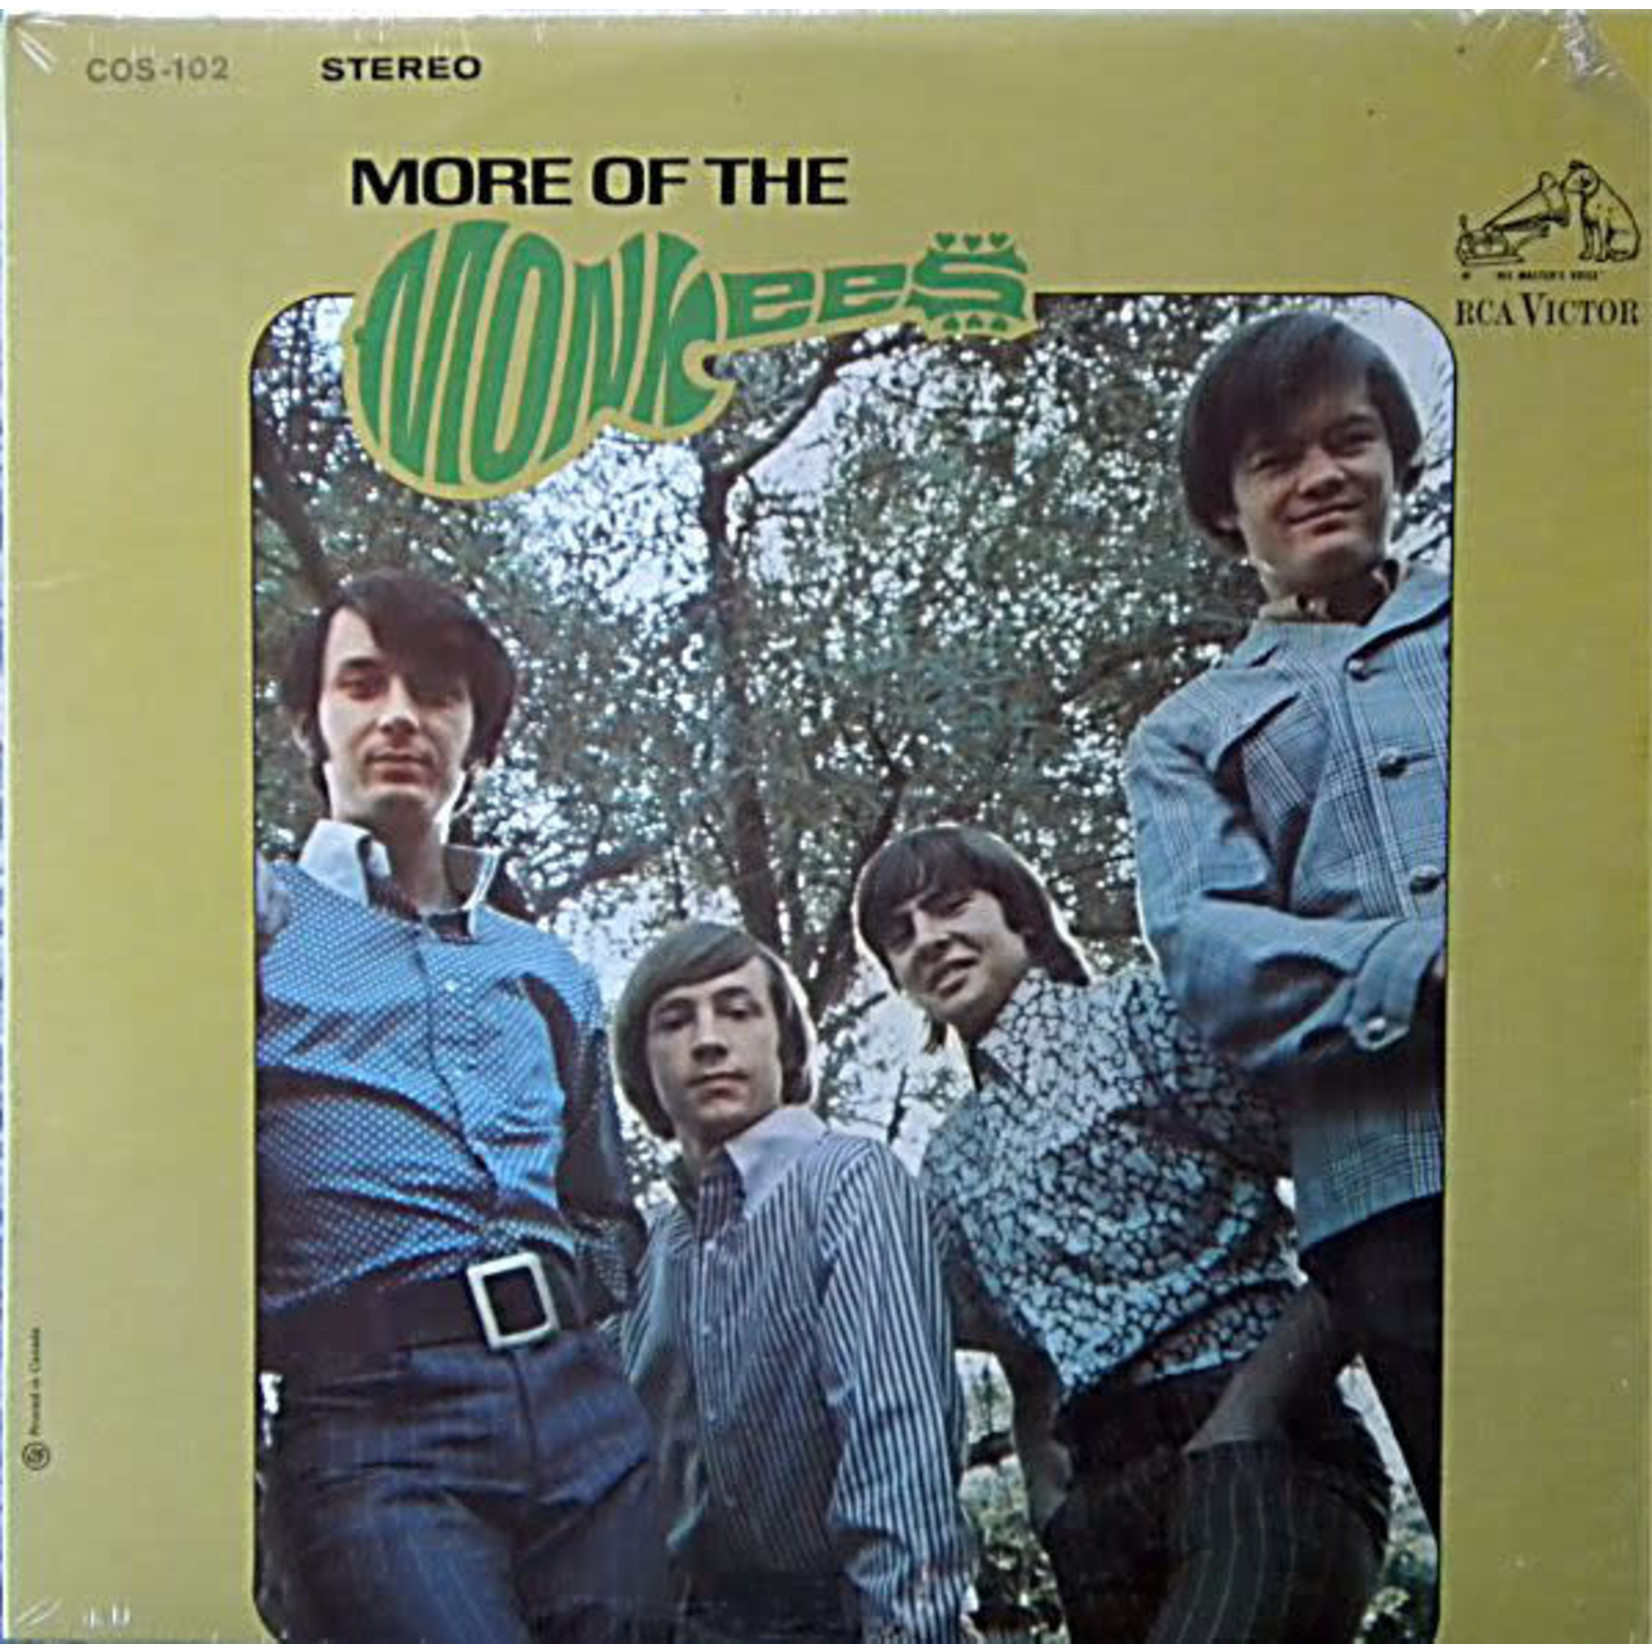 The Monkees The Monkees – More Of The Monkees (G, 1967, LP, Stereo, RCA Victor – COS-102, Canada)